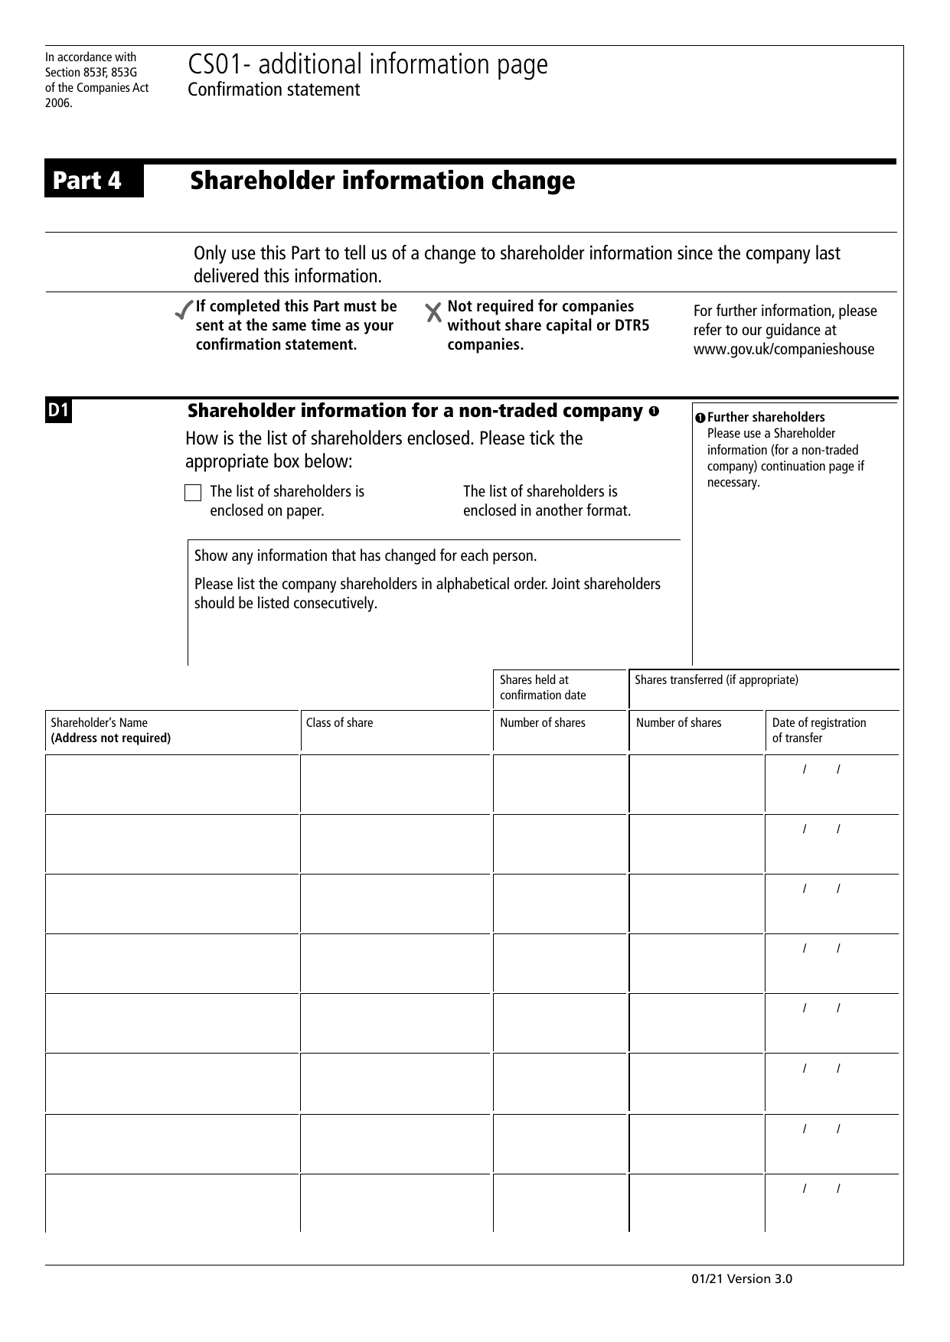 Form CS01 Part 4 Confirmation Statement - Shareholder Information Change - United Kingdom, Page 1